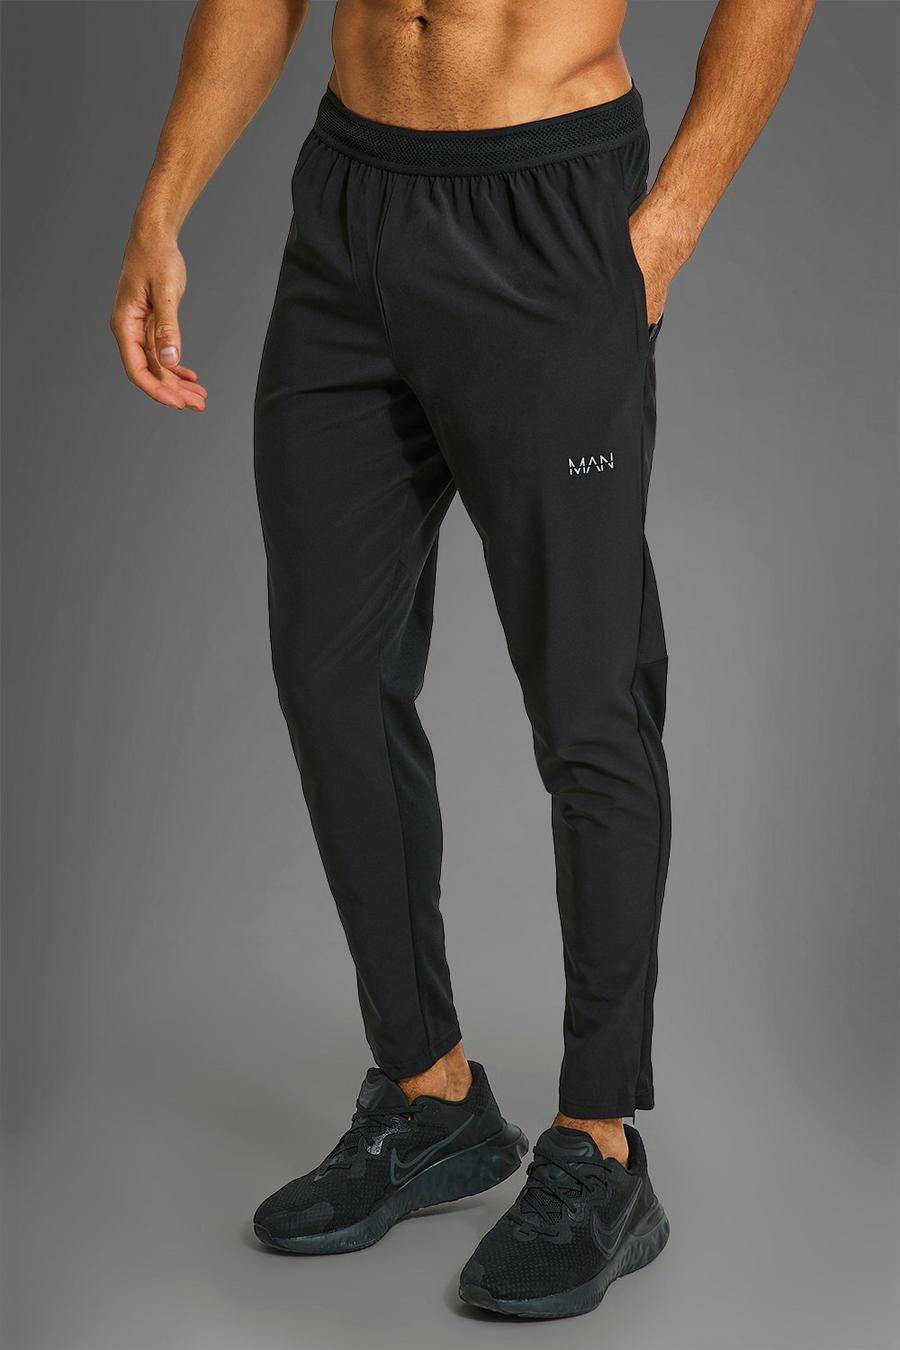 Pantaloni tuta Man Active Gym per alta performance con tasche e zip, Black